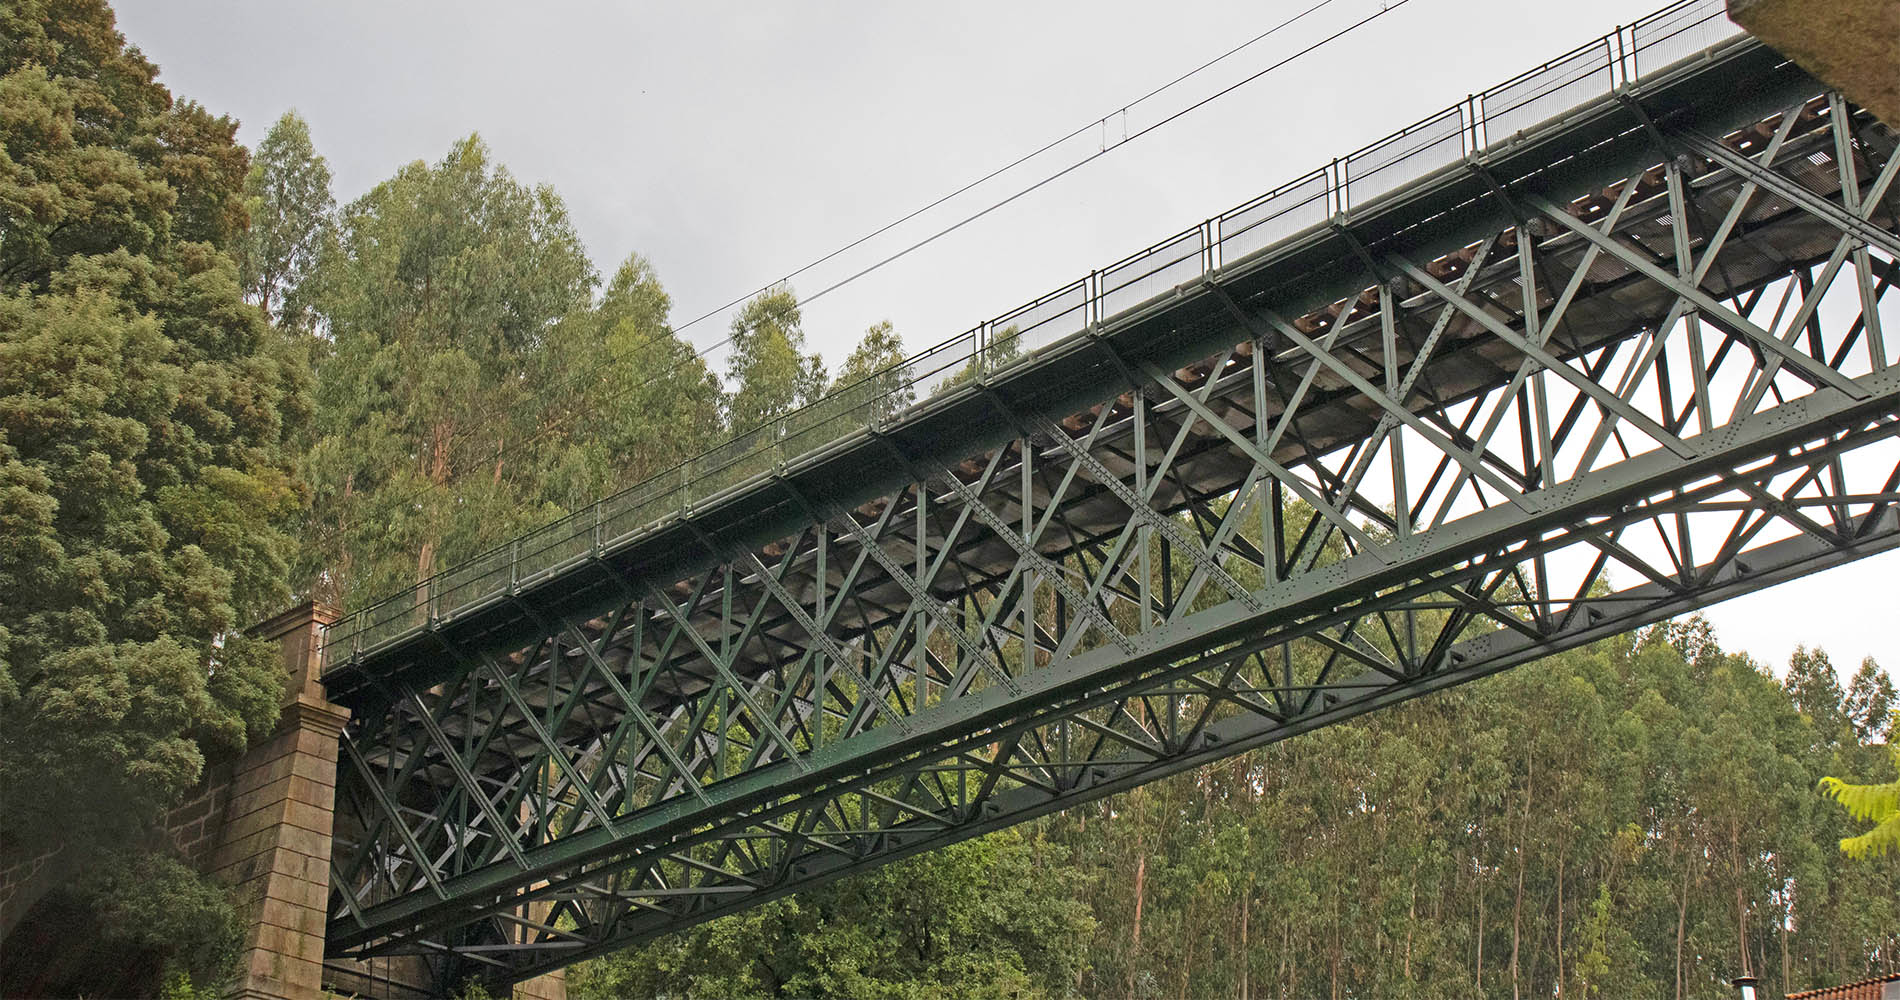 redondela pontevedra rias baixas turismo tourism viaducto viaduto viaduct